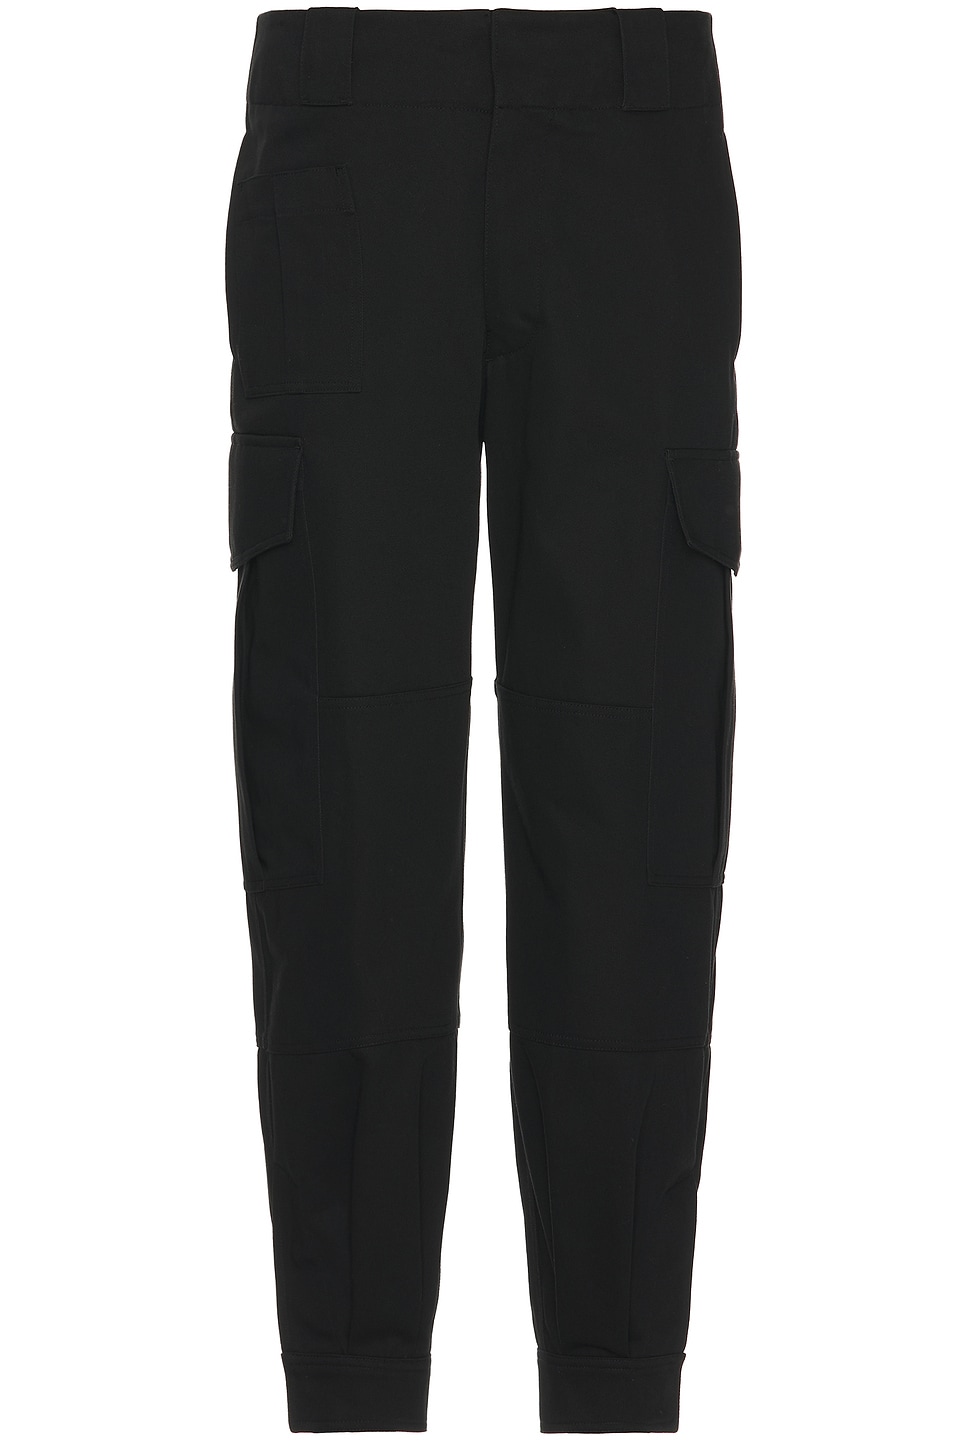 Image 1 of Alexander McQueen Large Pocket Trouser in Black